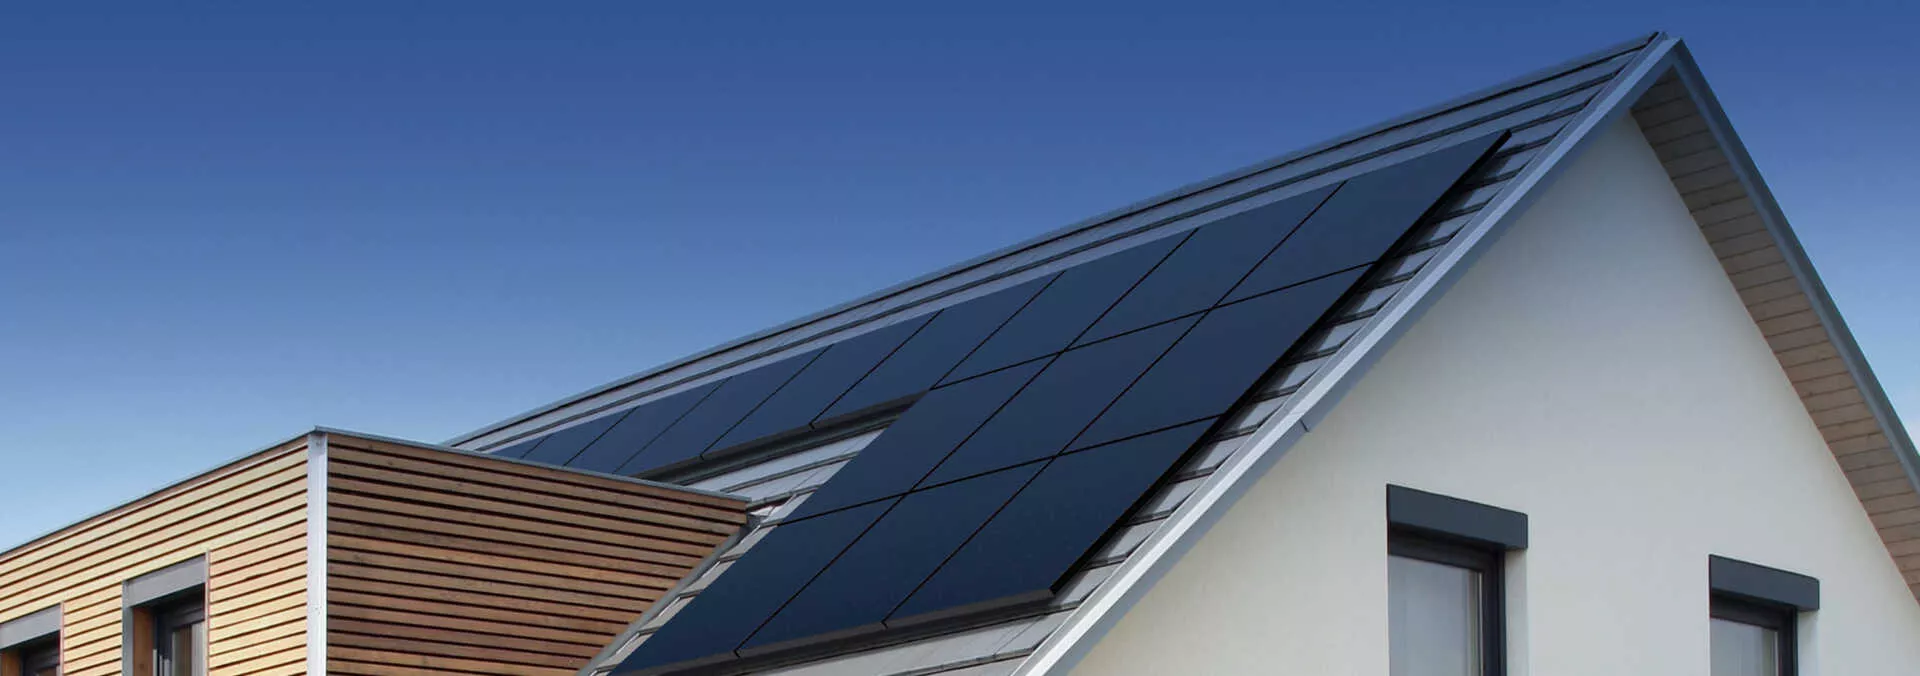 rooftop solar panels on an Australian home